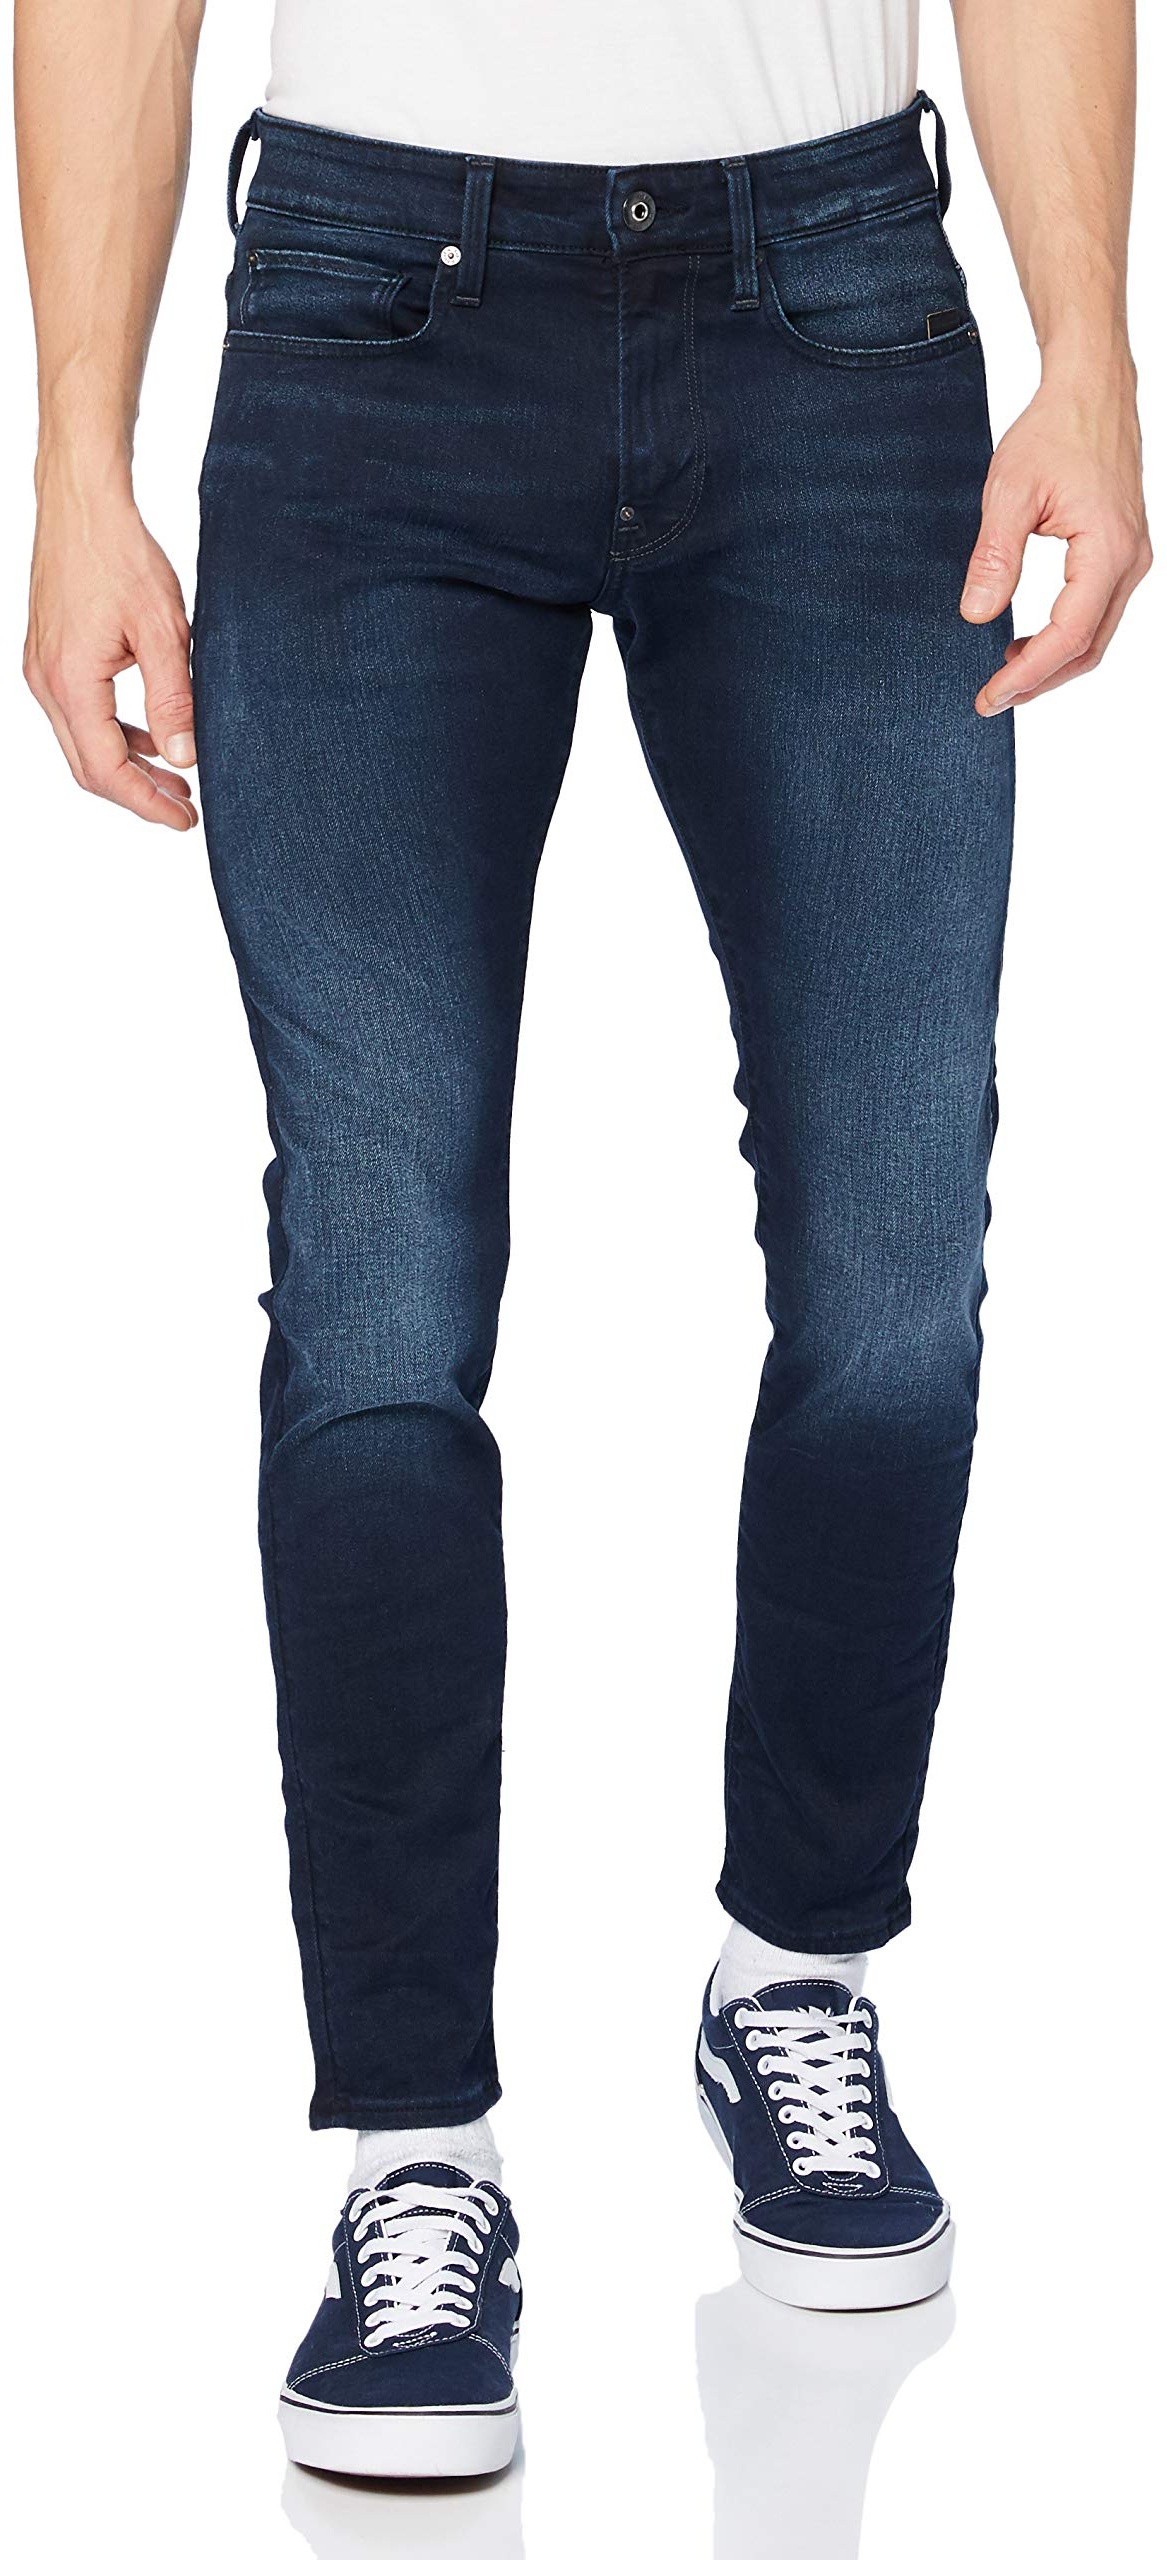 G-STAR RAW Herren Revend Skinny Jeans, Blau (dk aged 51010-6590-89), 27W / 30L